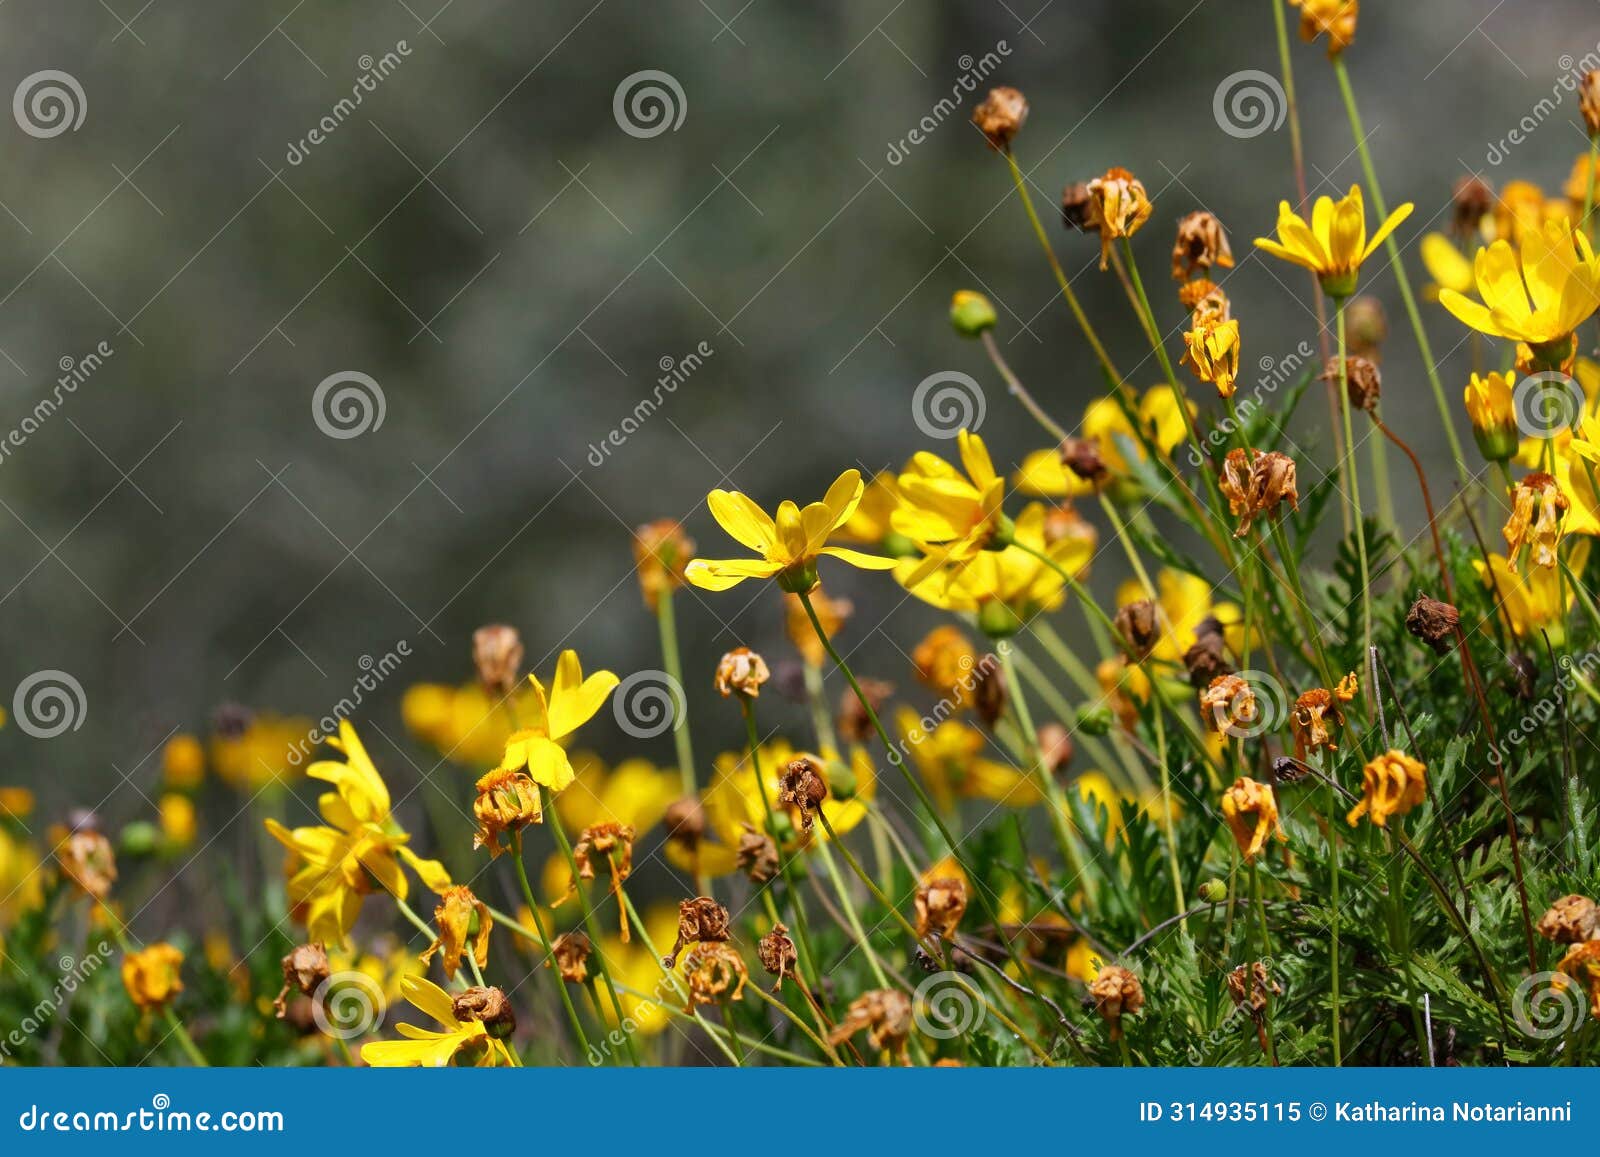 spring bloom series - bright yellow daisies - daisy shrub - euryops pectinatus